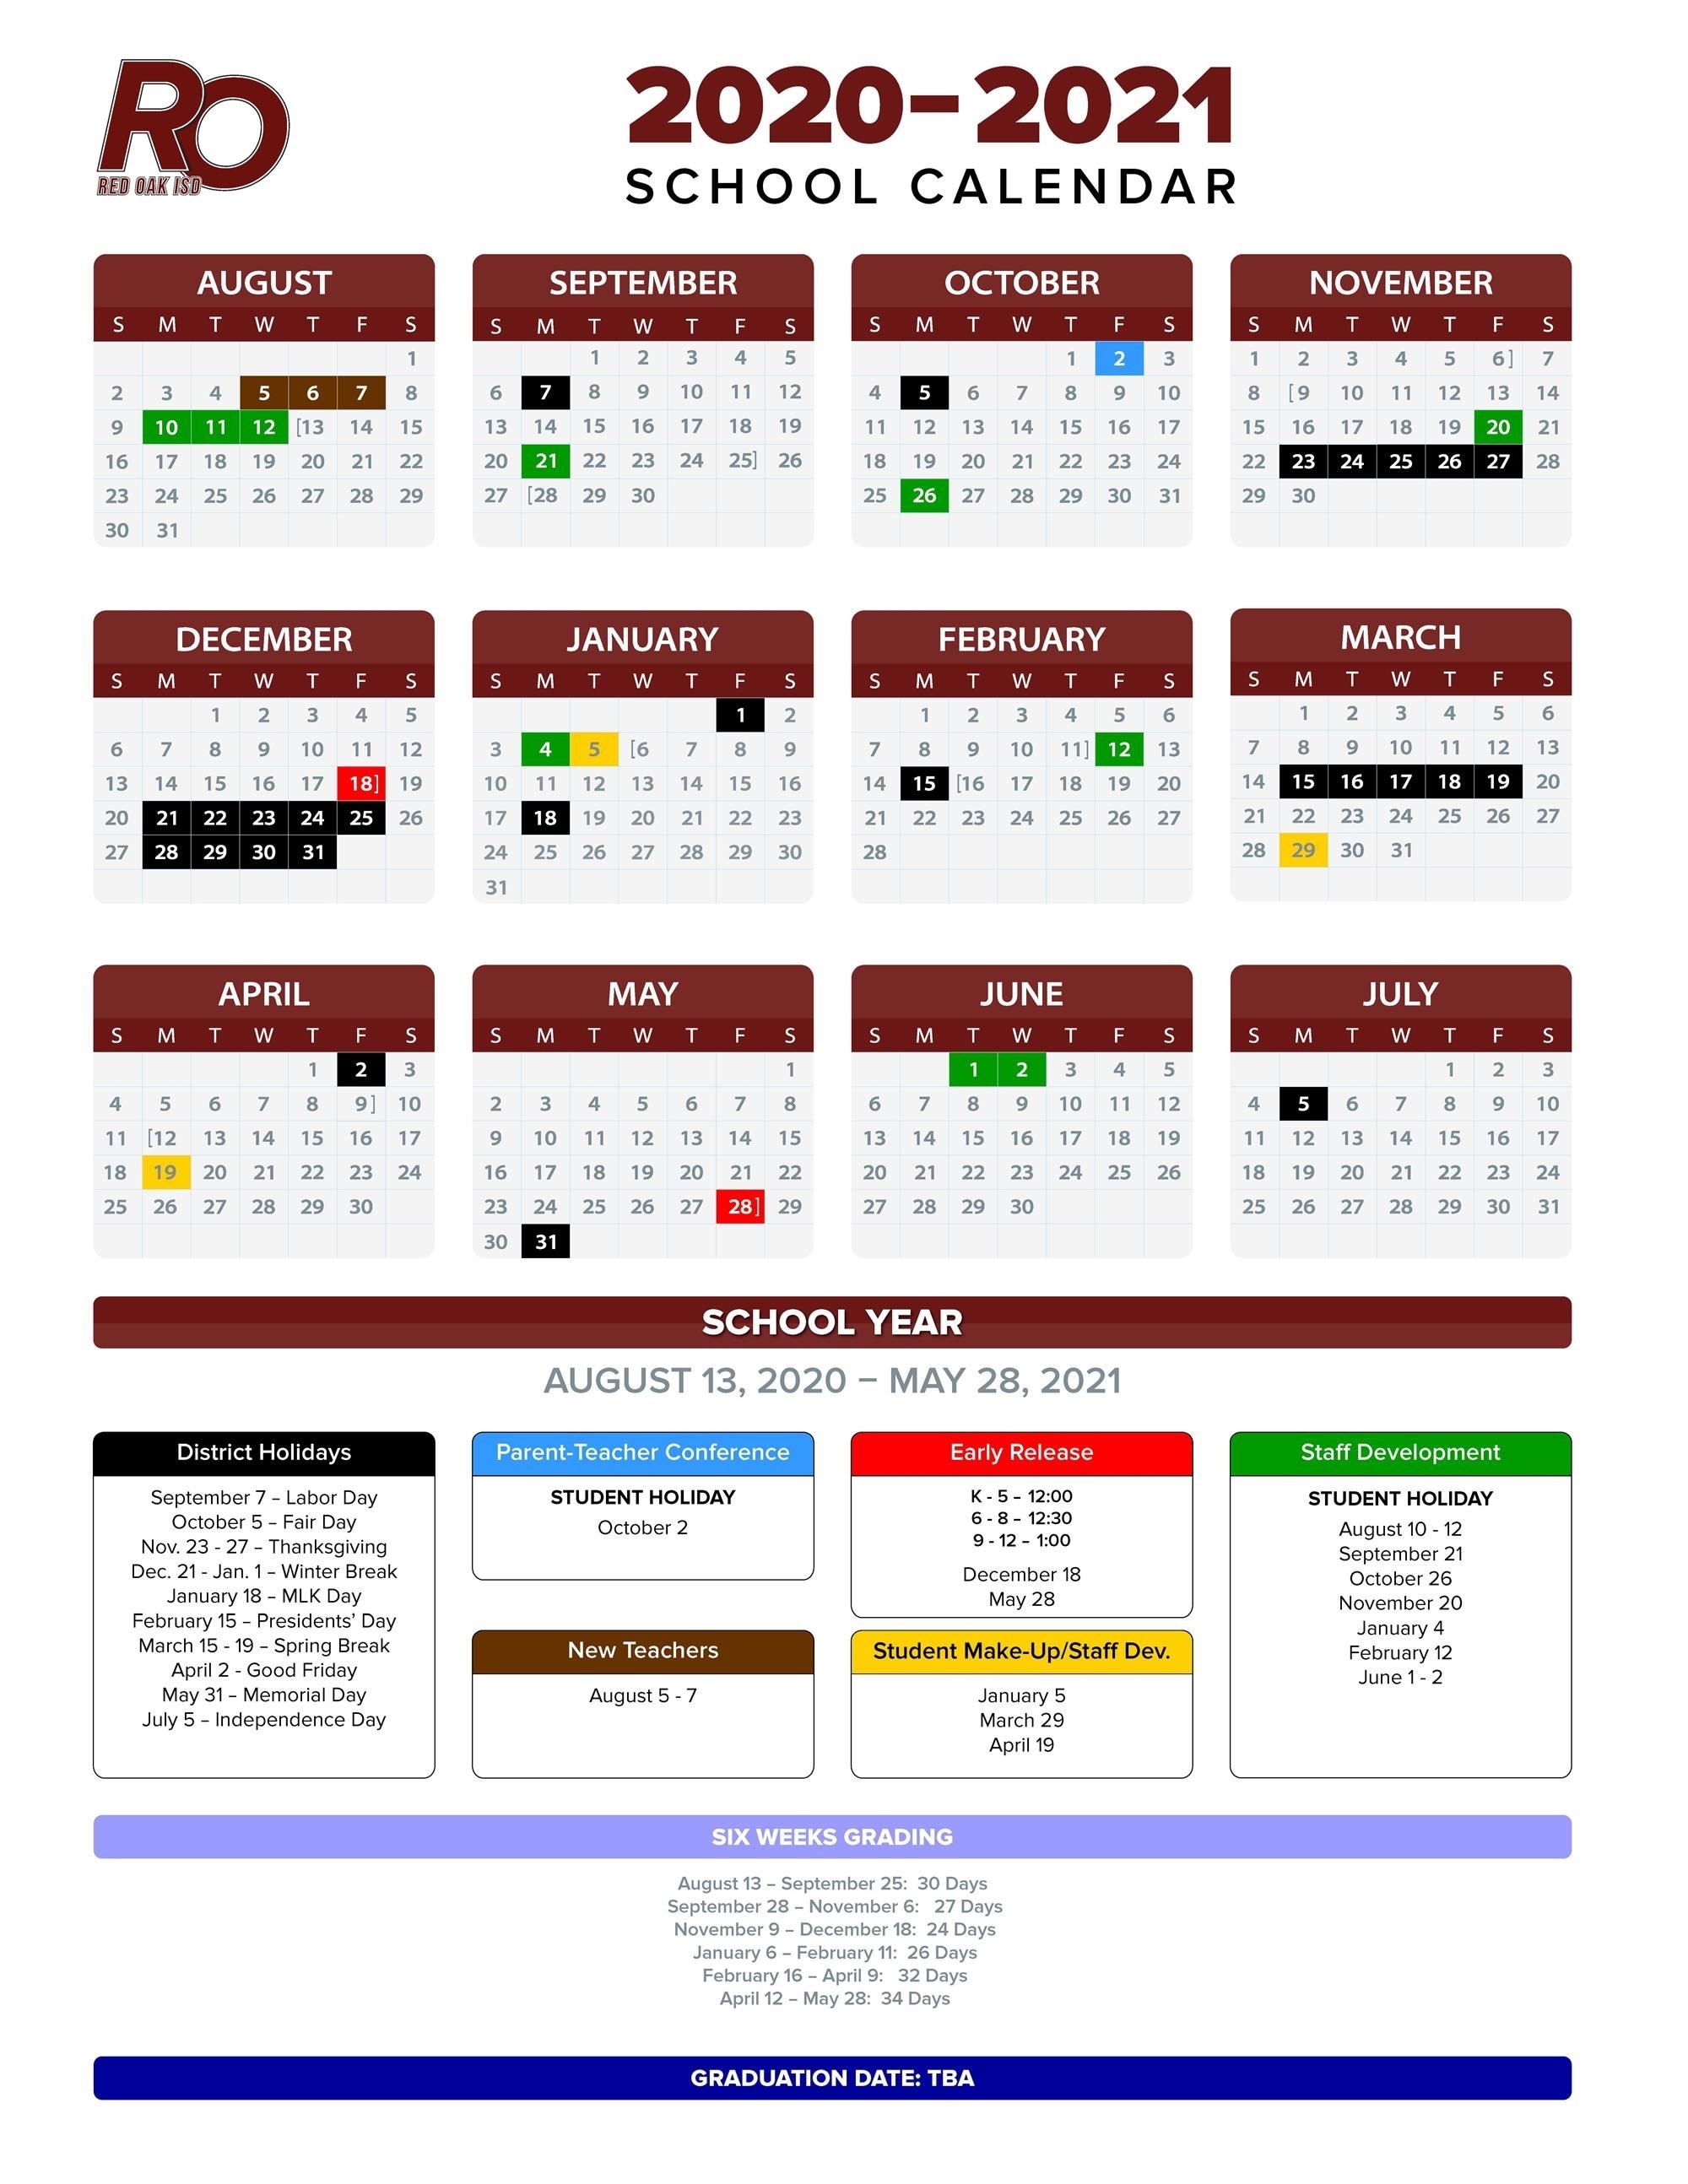 2020-2021 School Calendar / Annual Calendar - 2020-2021